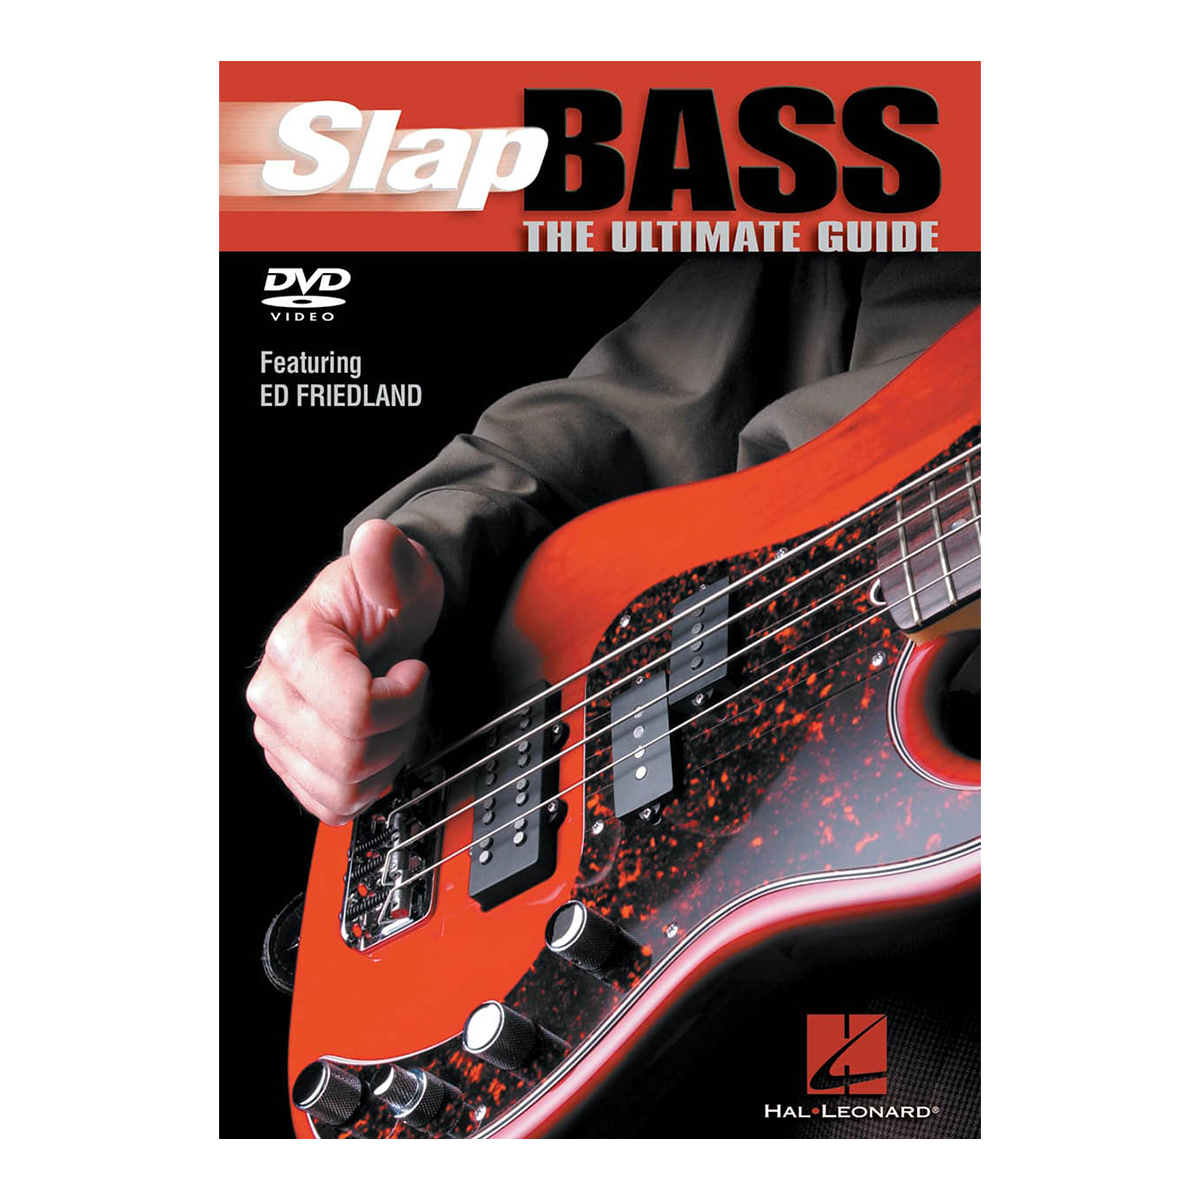 Slap Bass The Ultimate Guide (DVD)